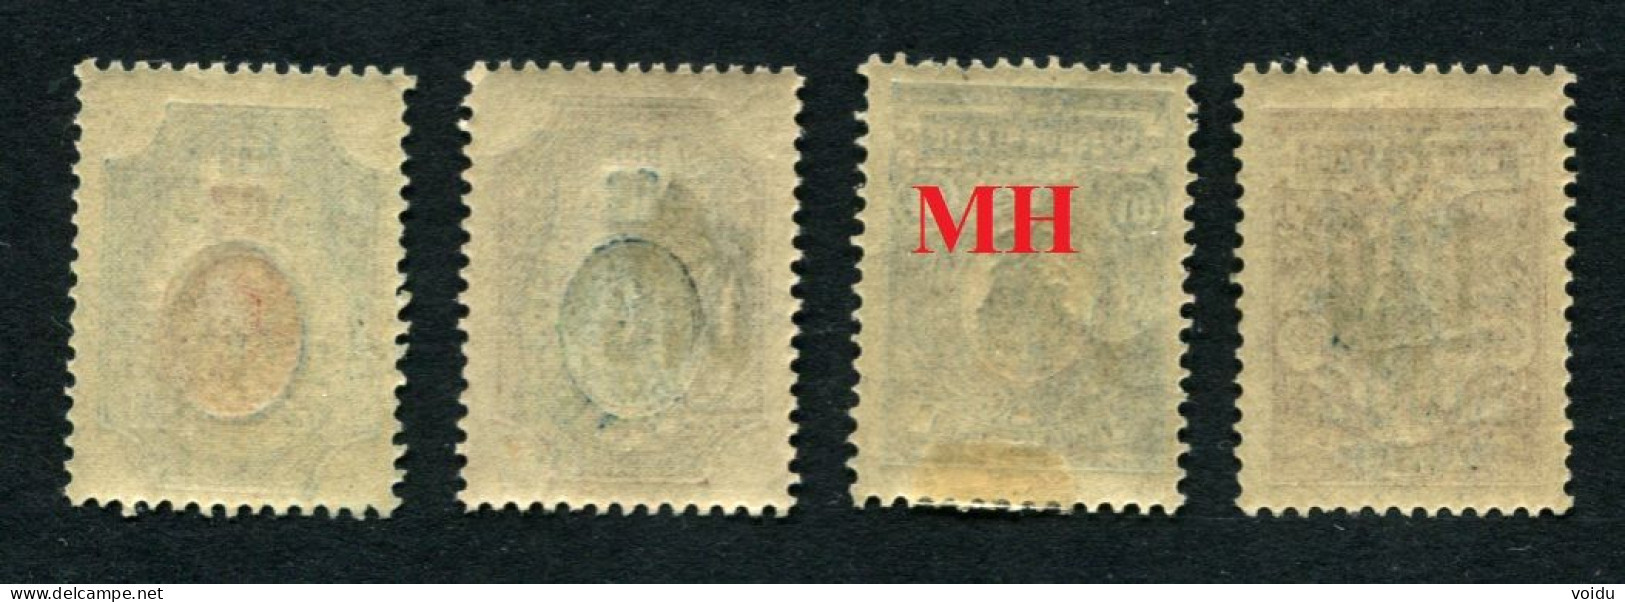 Russia 1920 Wrangel Army. Ukraine MH/MNH**  Inverted Overprints,  3x MNH** - Armada Wrangel